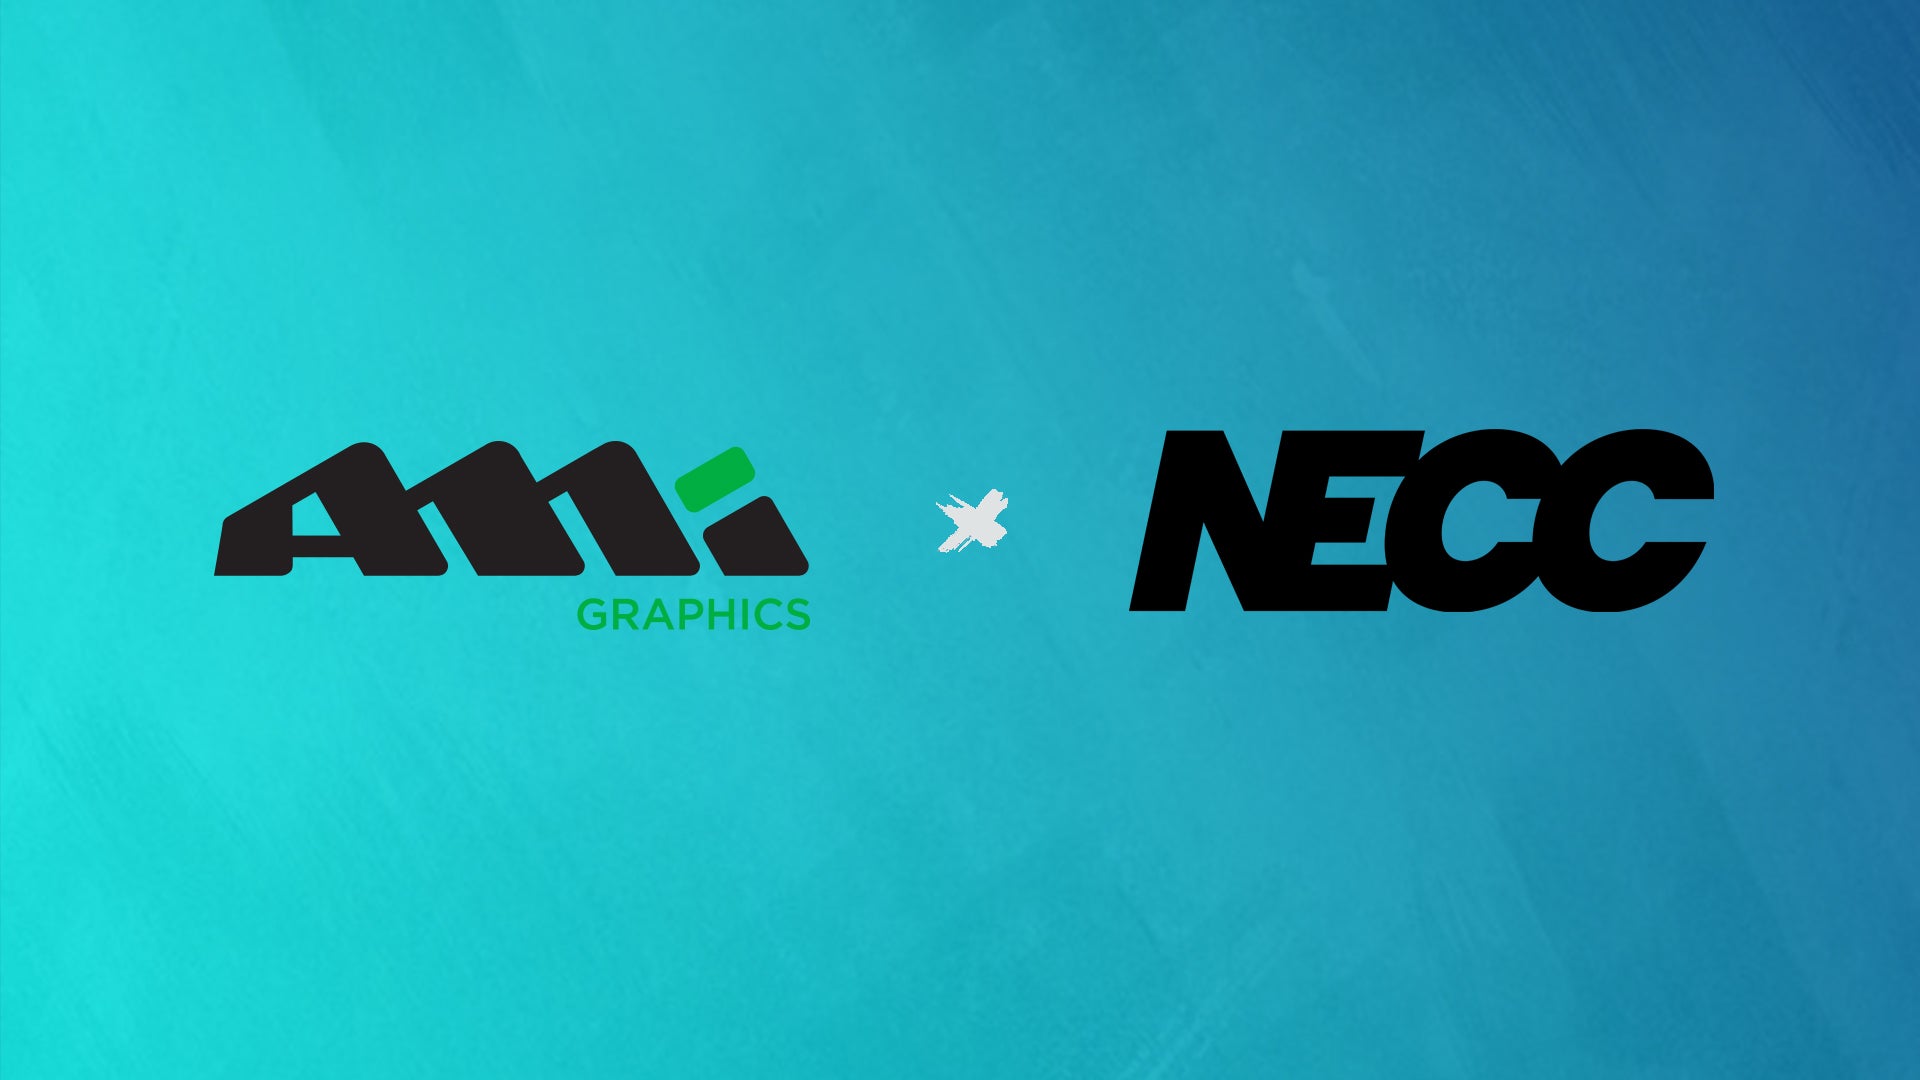 NECC Announces Partnership with AMI Graphics